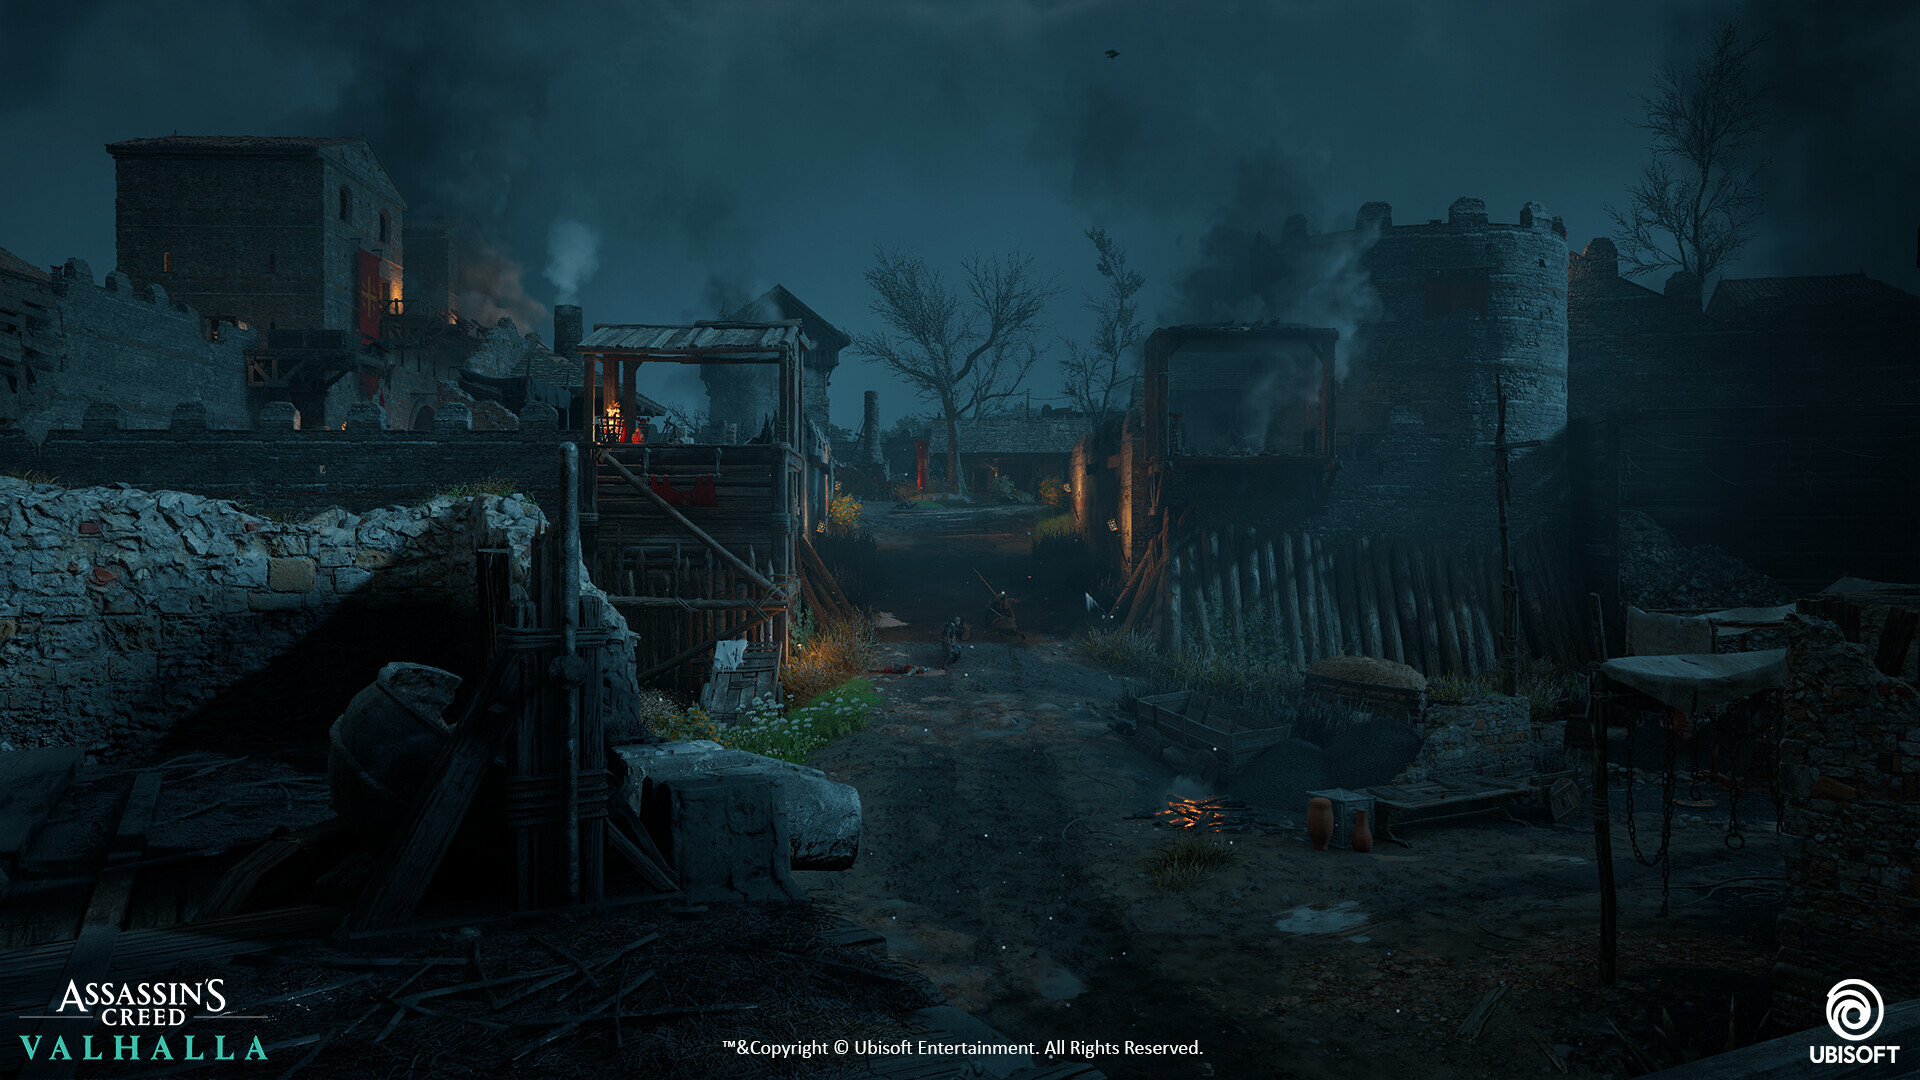 ArtStation - Assassin's Creed Valhalla lighting by Ana Tornero Part 6